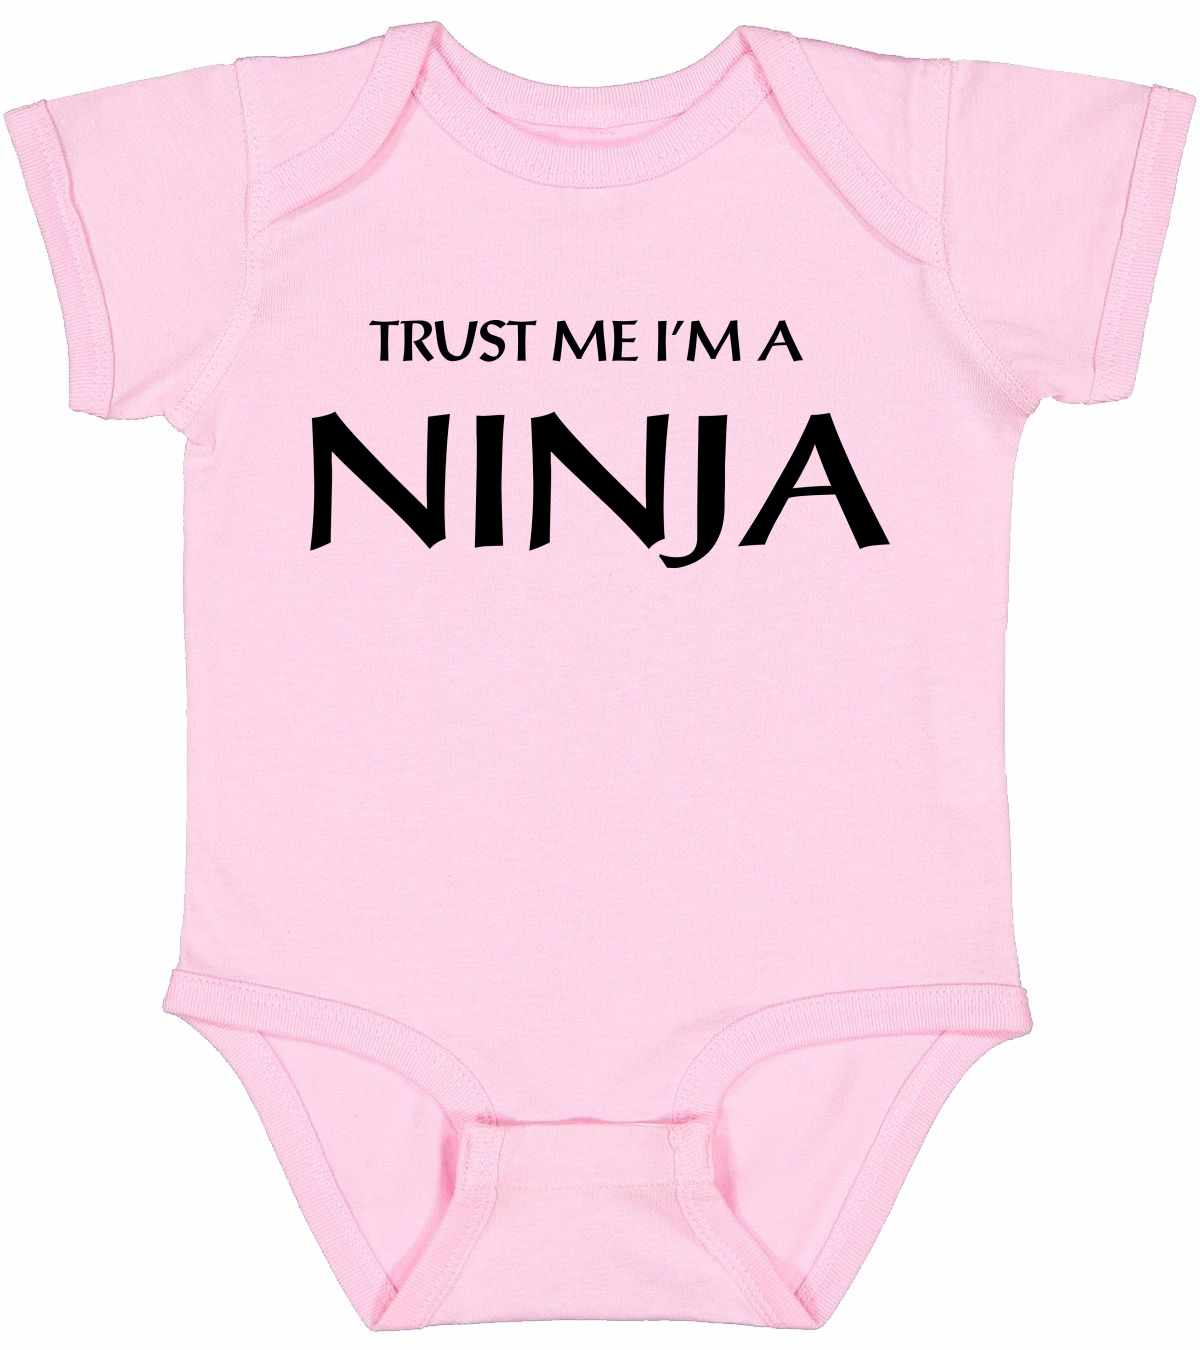 Trust Me I'm a NINJA on Infant BodySuit (#774-10)